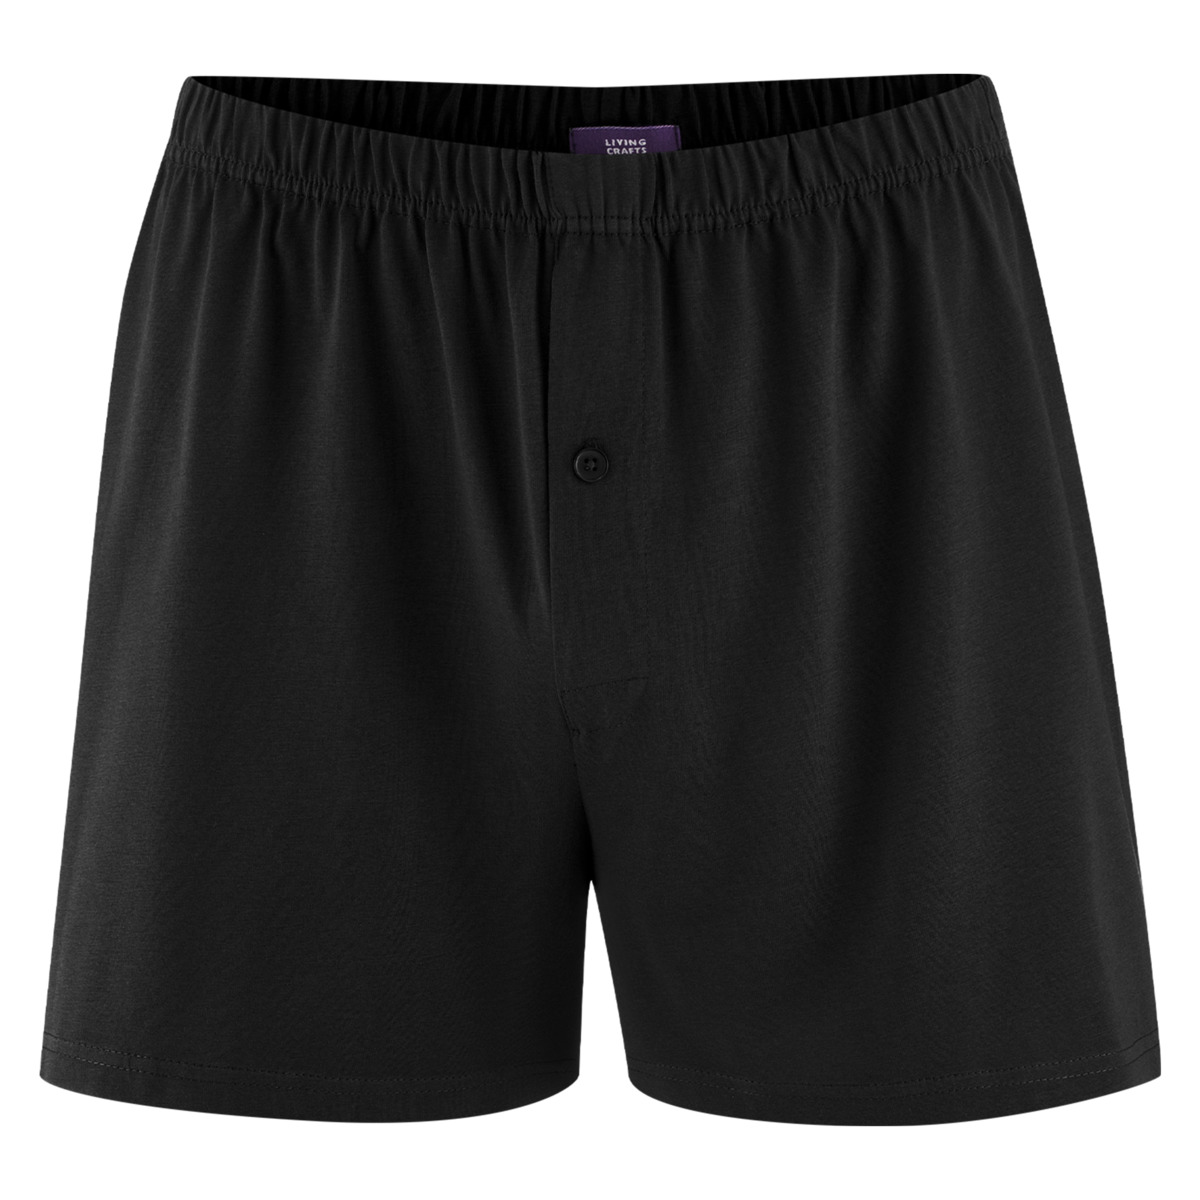 Black Boxer shorts, BEN